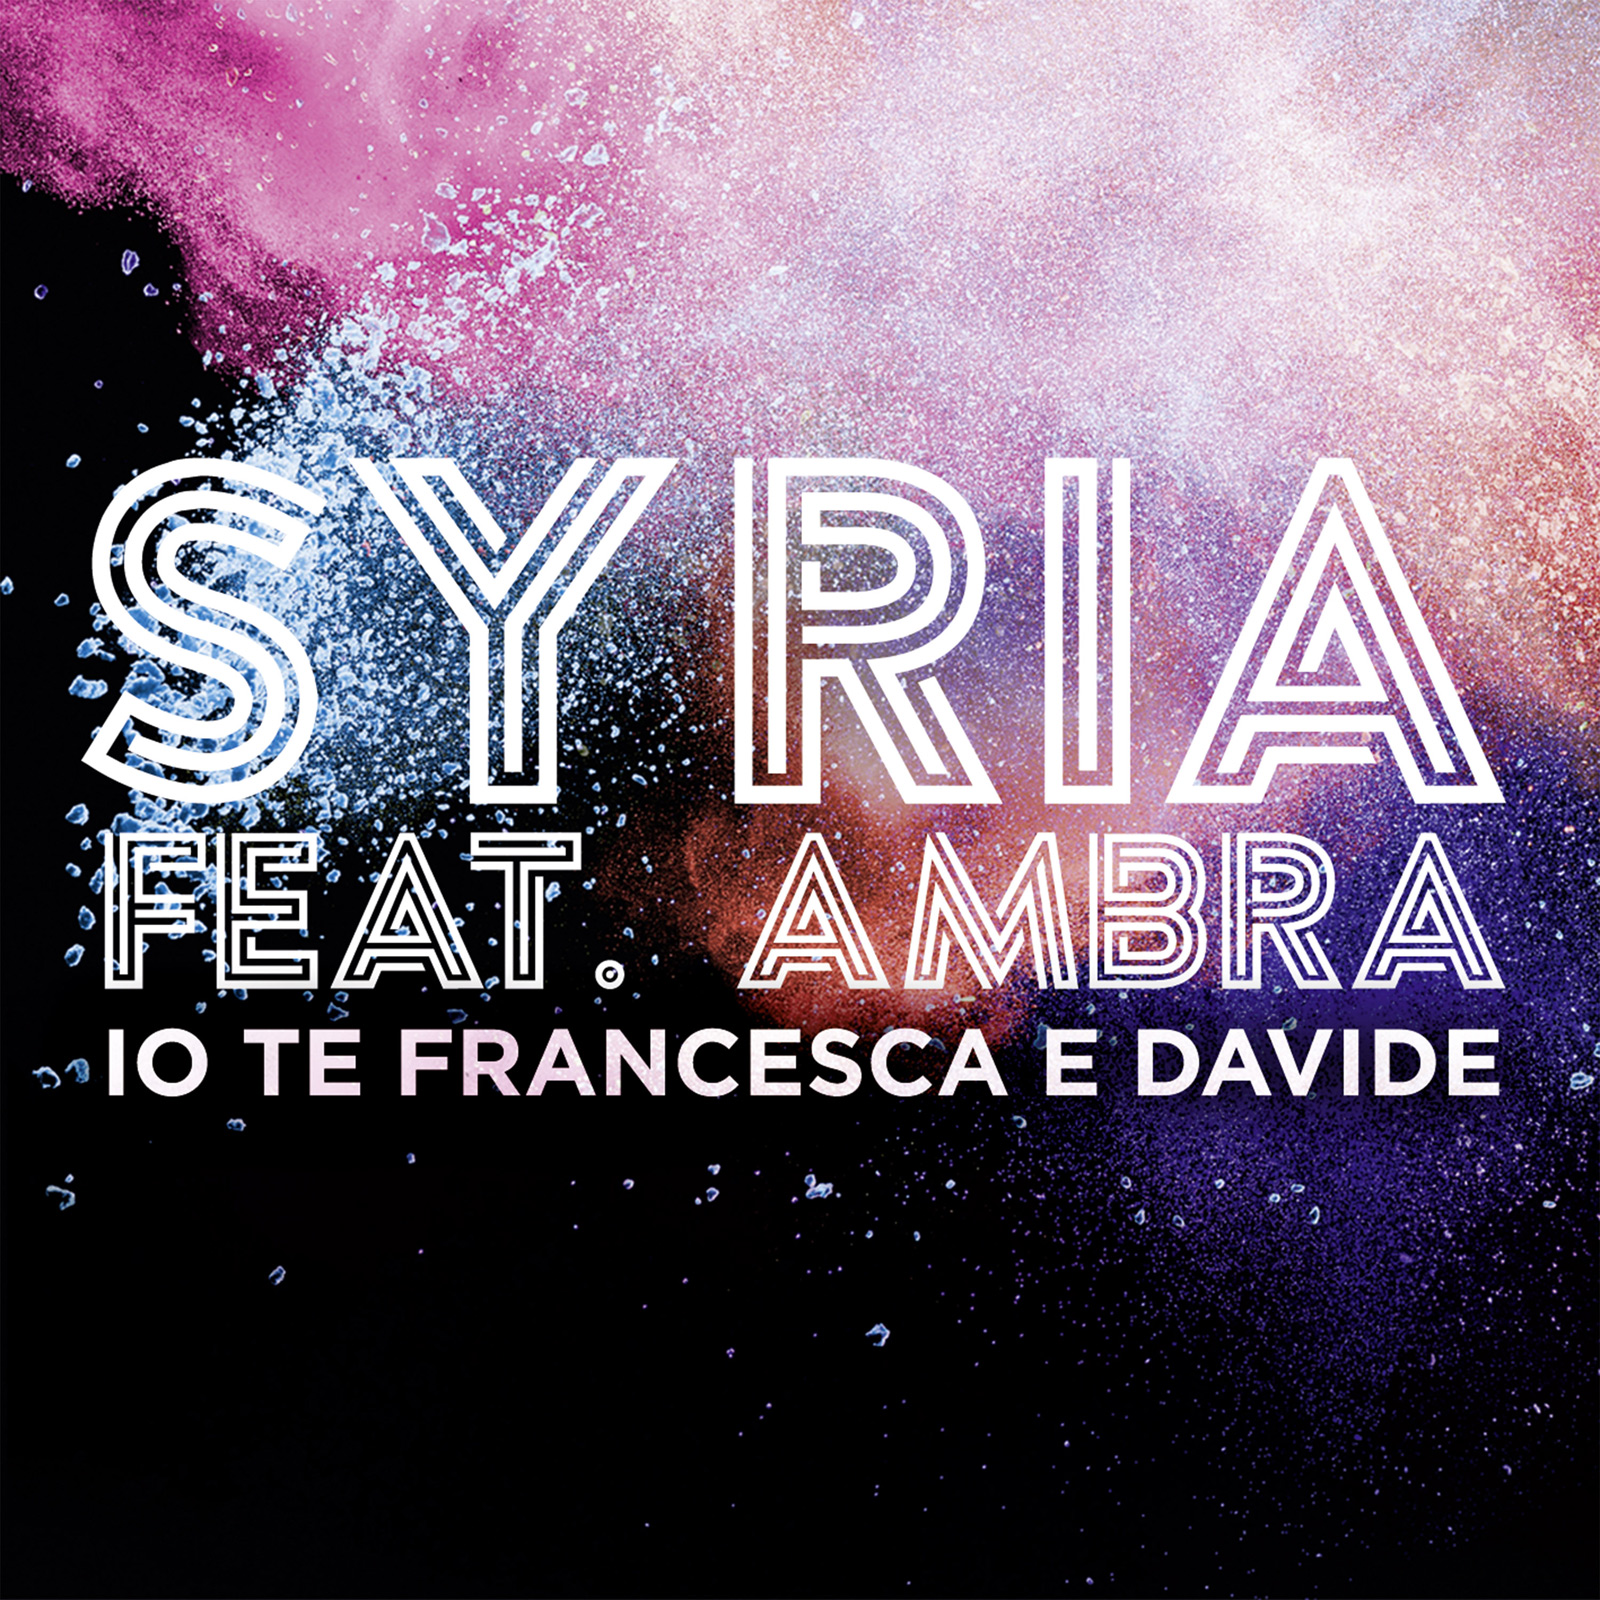 Syria feat. Ambra  “IO TE FRANCESCA E DAVIDE”